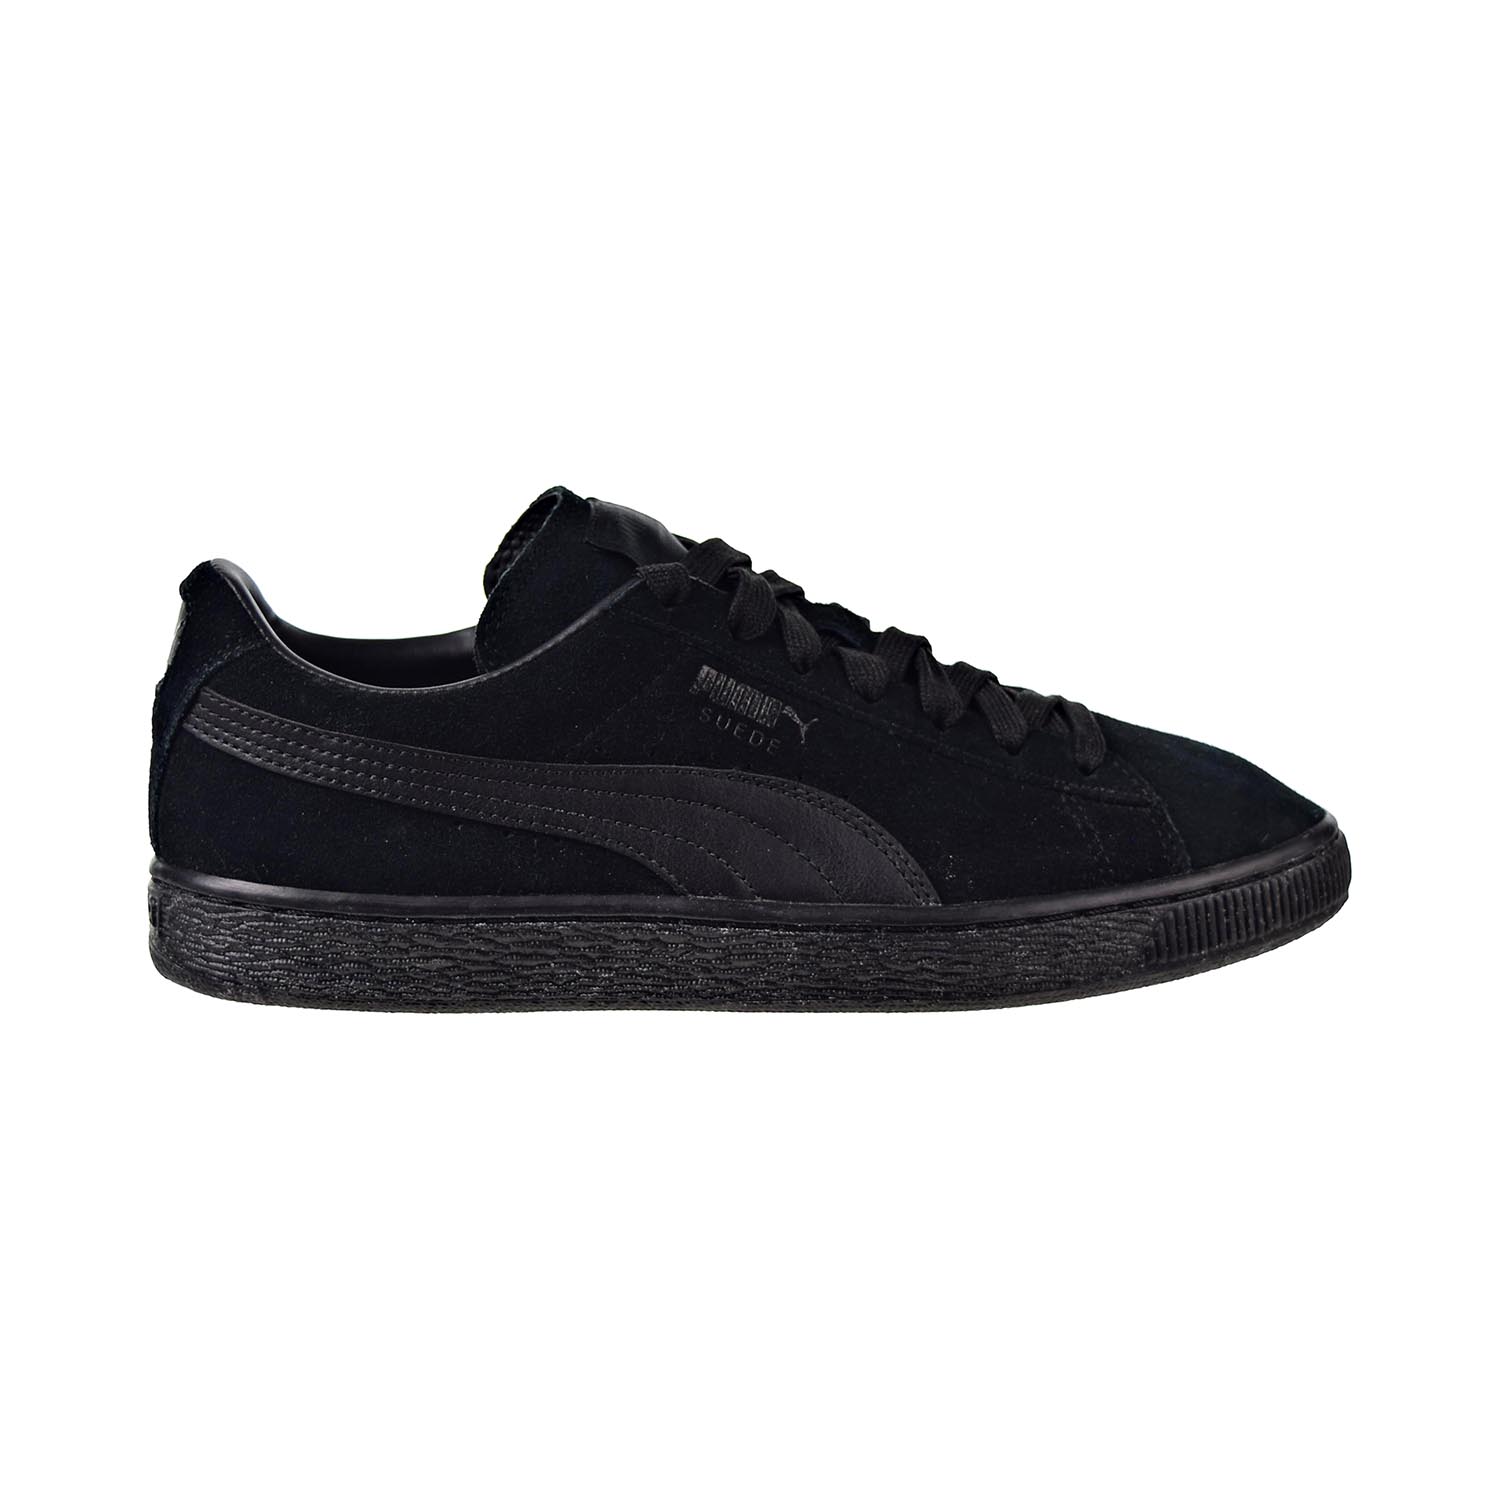 Puma Suede Classic + LFS Men's Shoes Black-Black 356328-01 | eBay